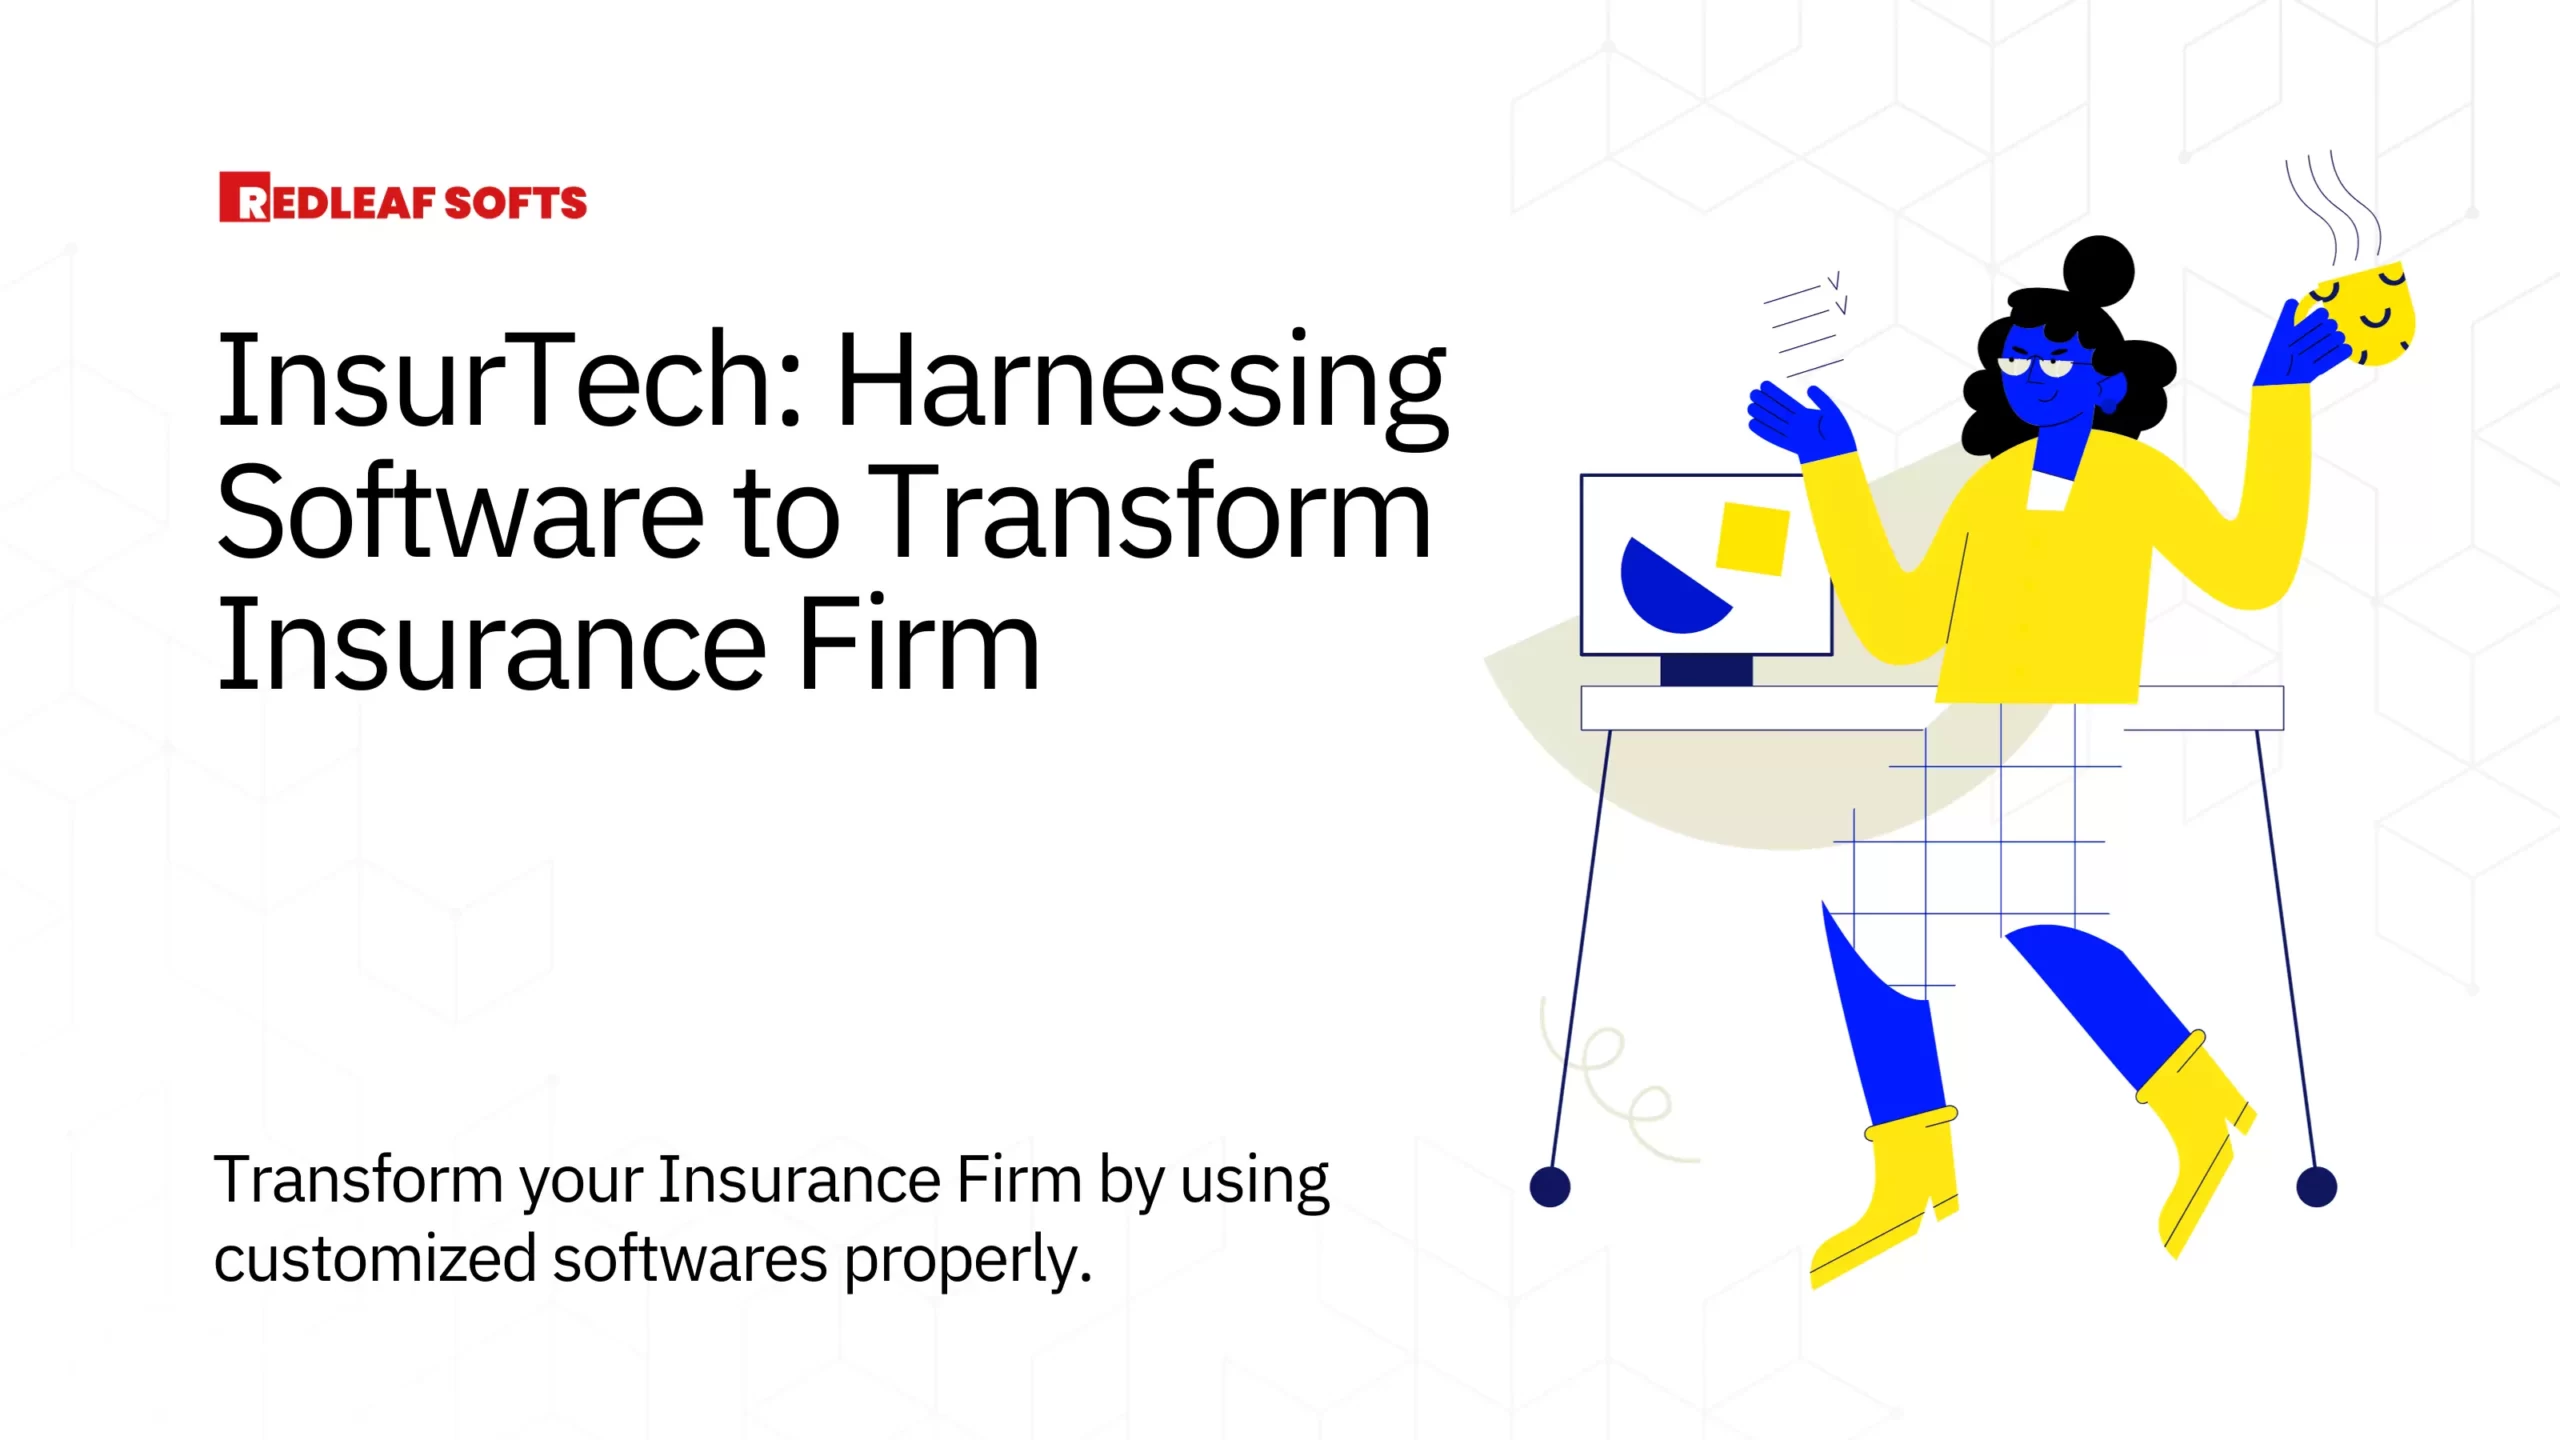 InsurTech: Harnessing Software to Transform Insurance Firm